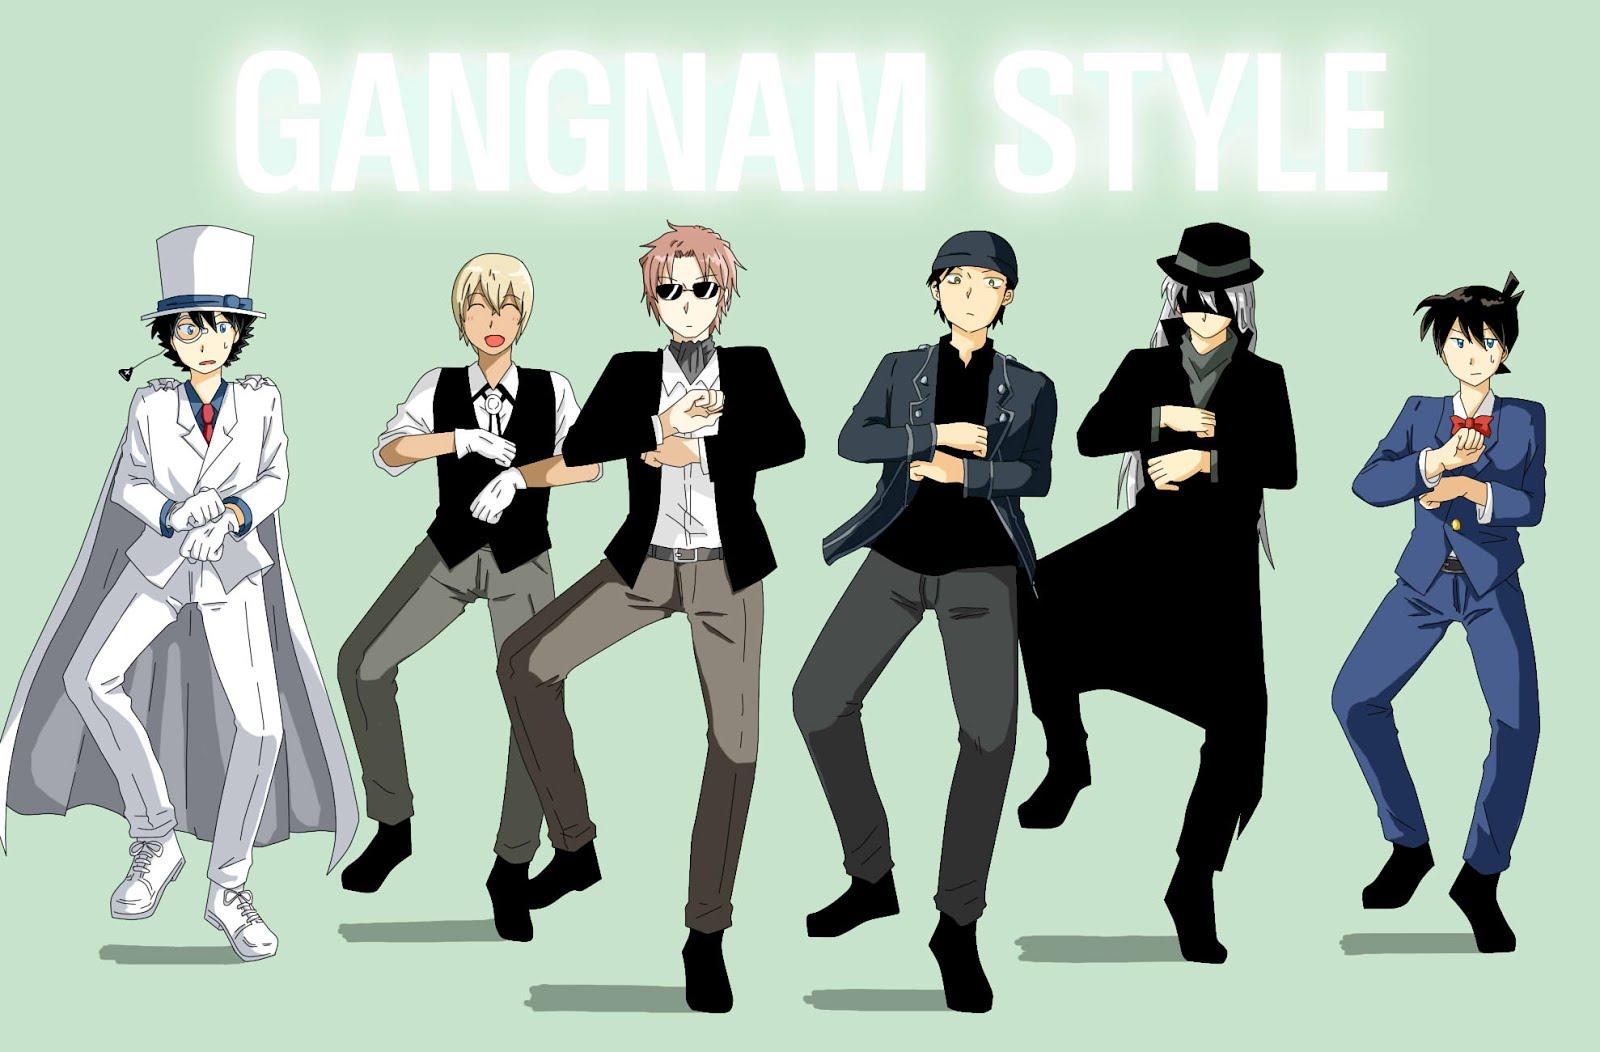 gangnam style wallpaper